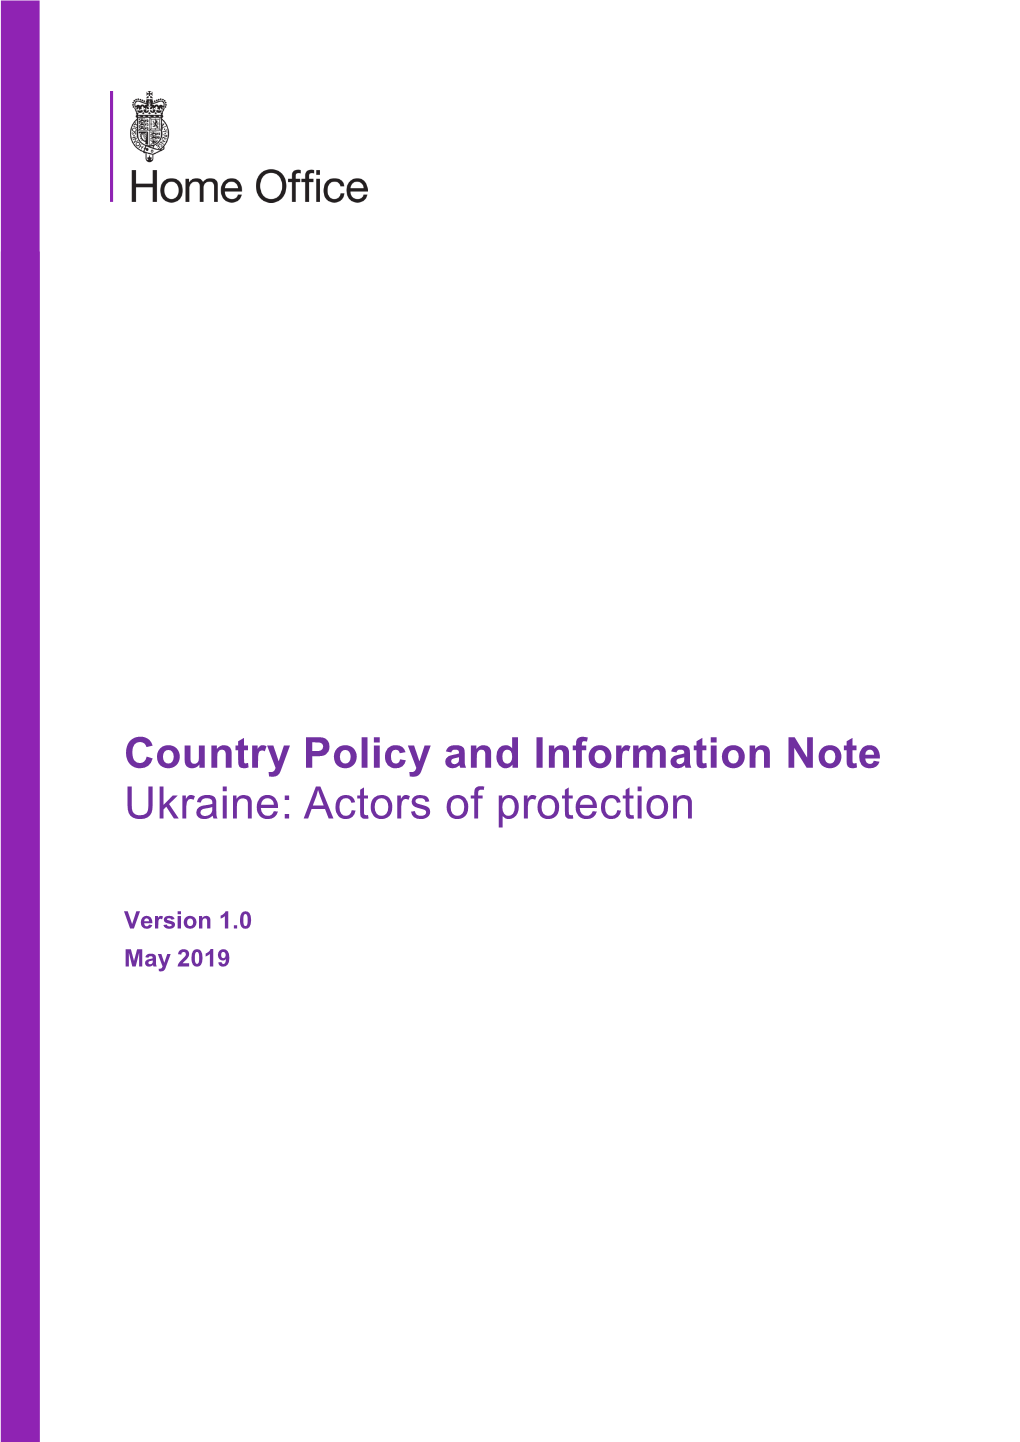 Ukraine: Actors of Protection